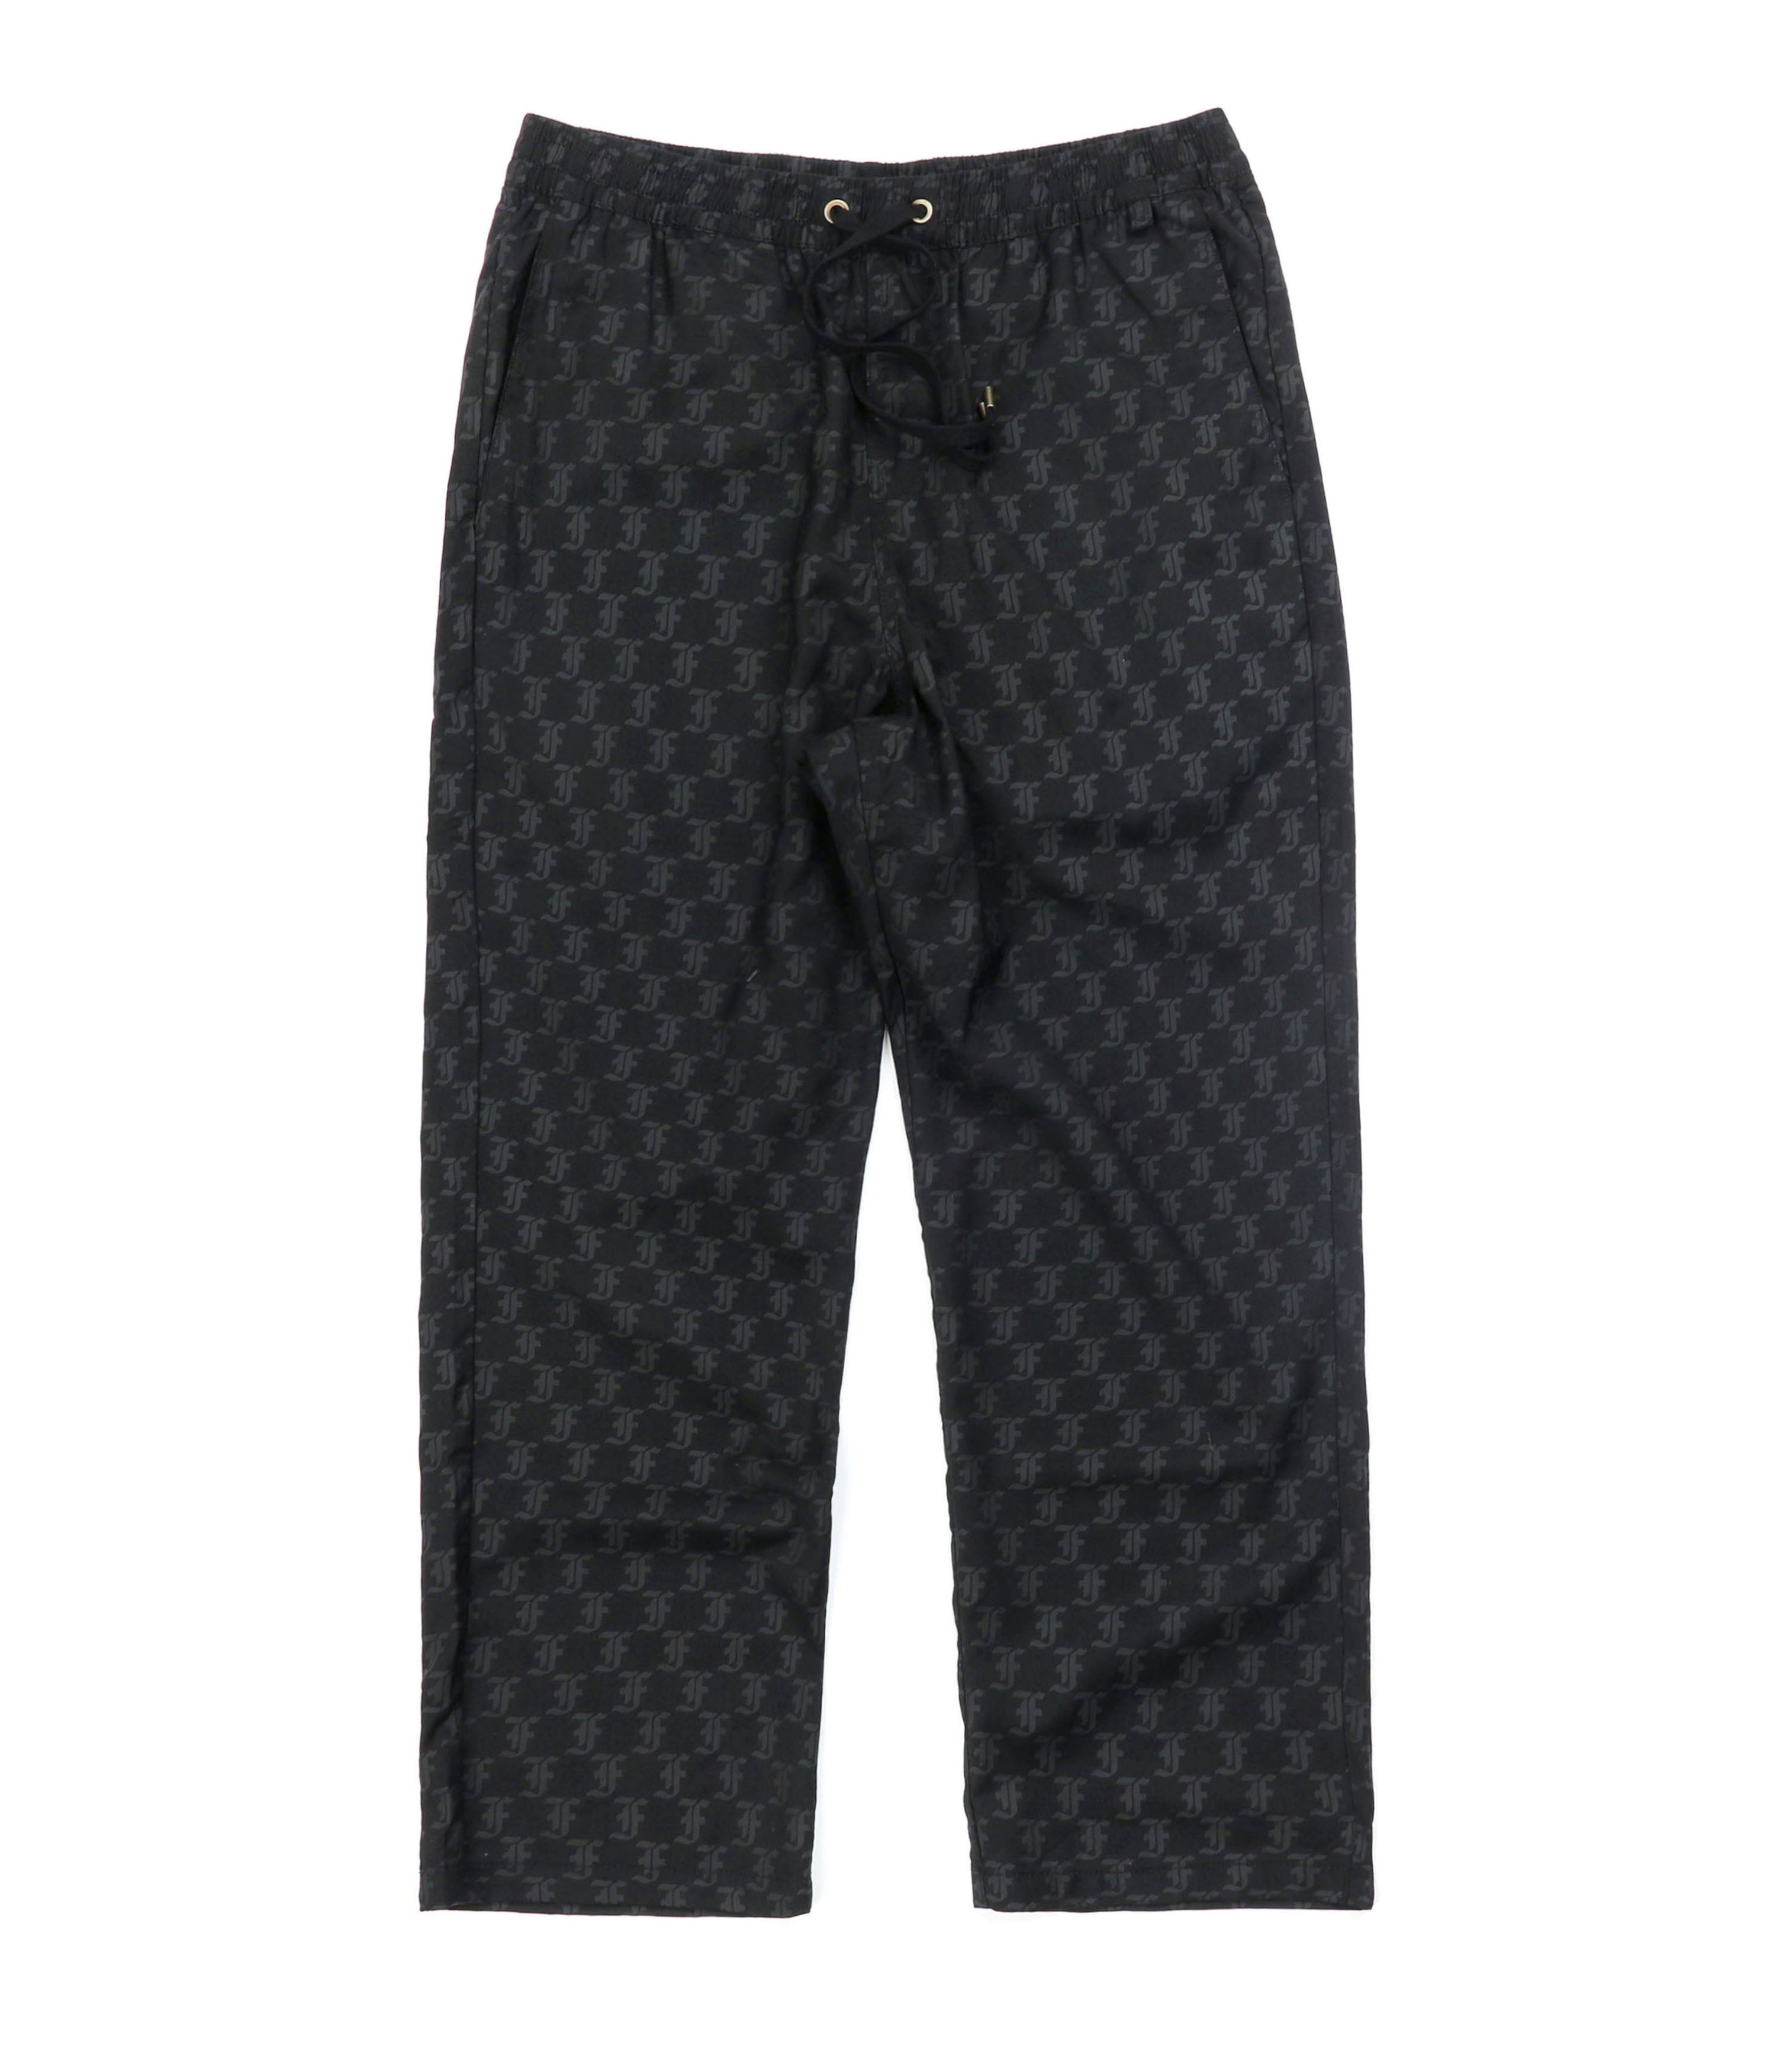 Louis Vuitton Monogram Camo Fleece Sweatpants